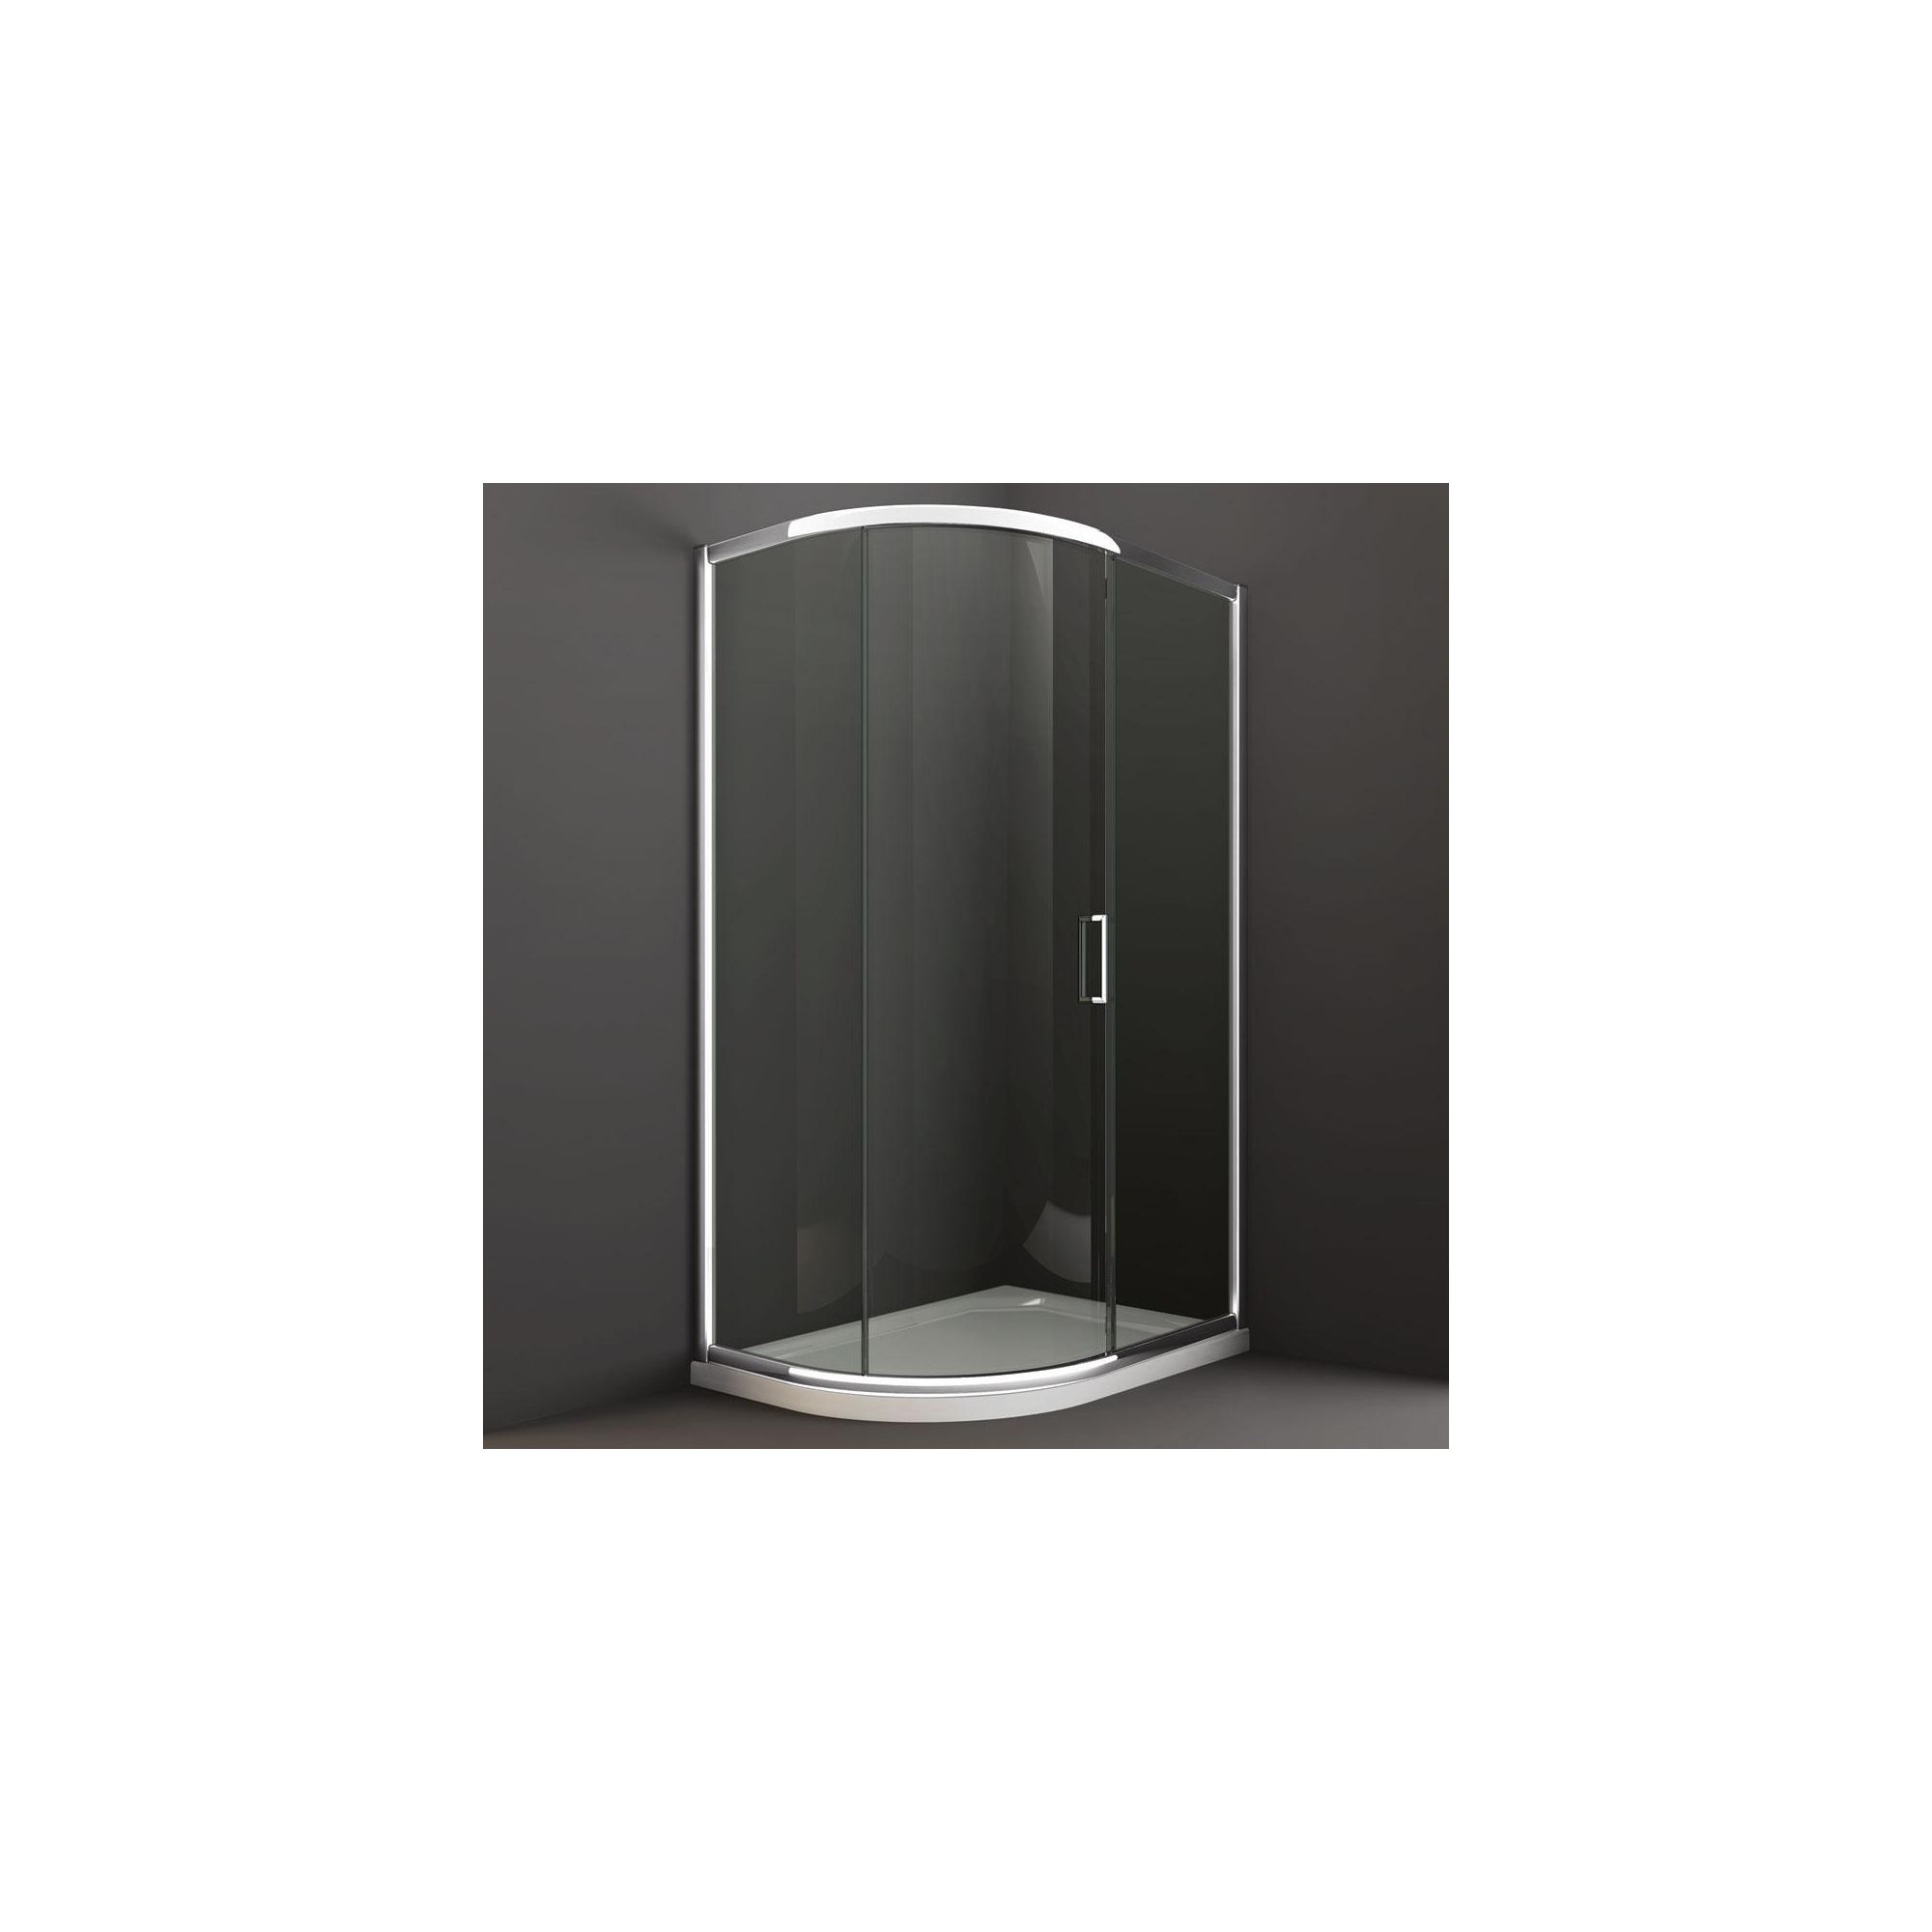 Merlyn Series 8 Offset Quadrant Shower Door, 1000mm x 800mm, Chrome Frame, 8mm Glass at Tesco Direct